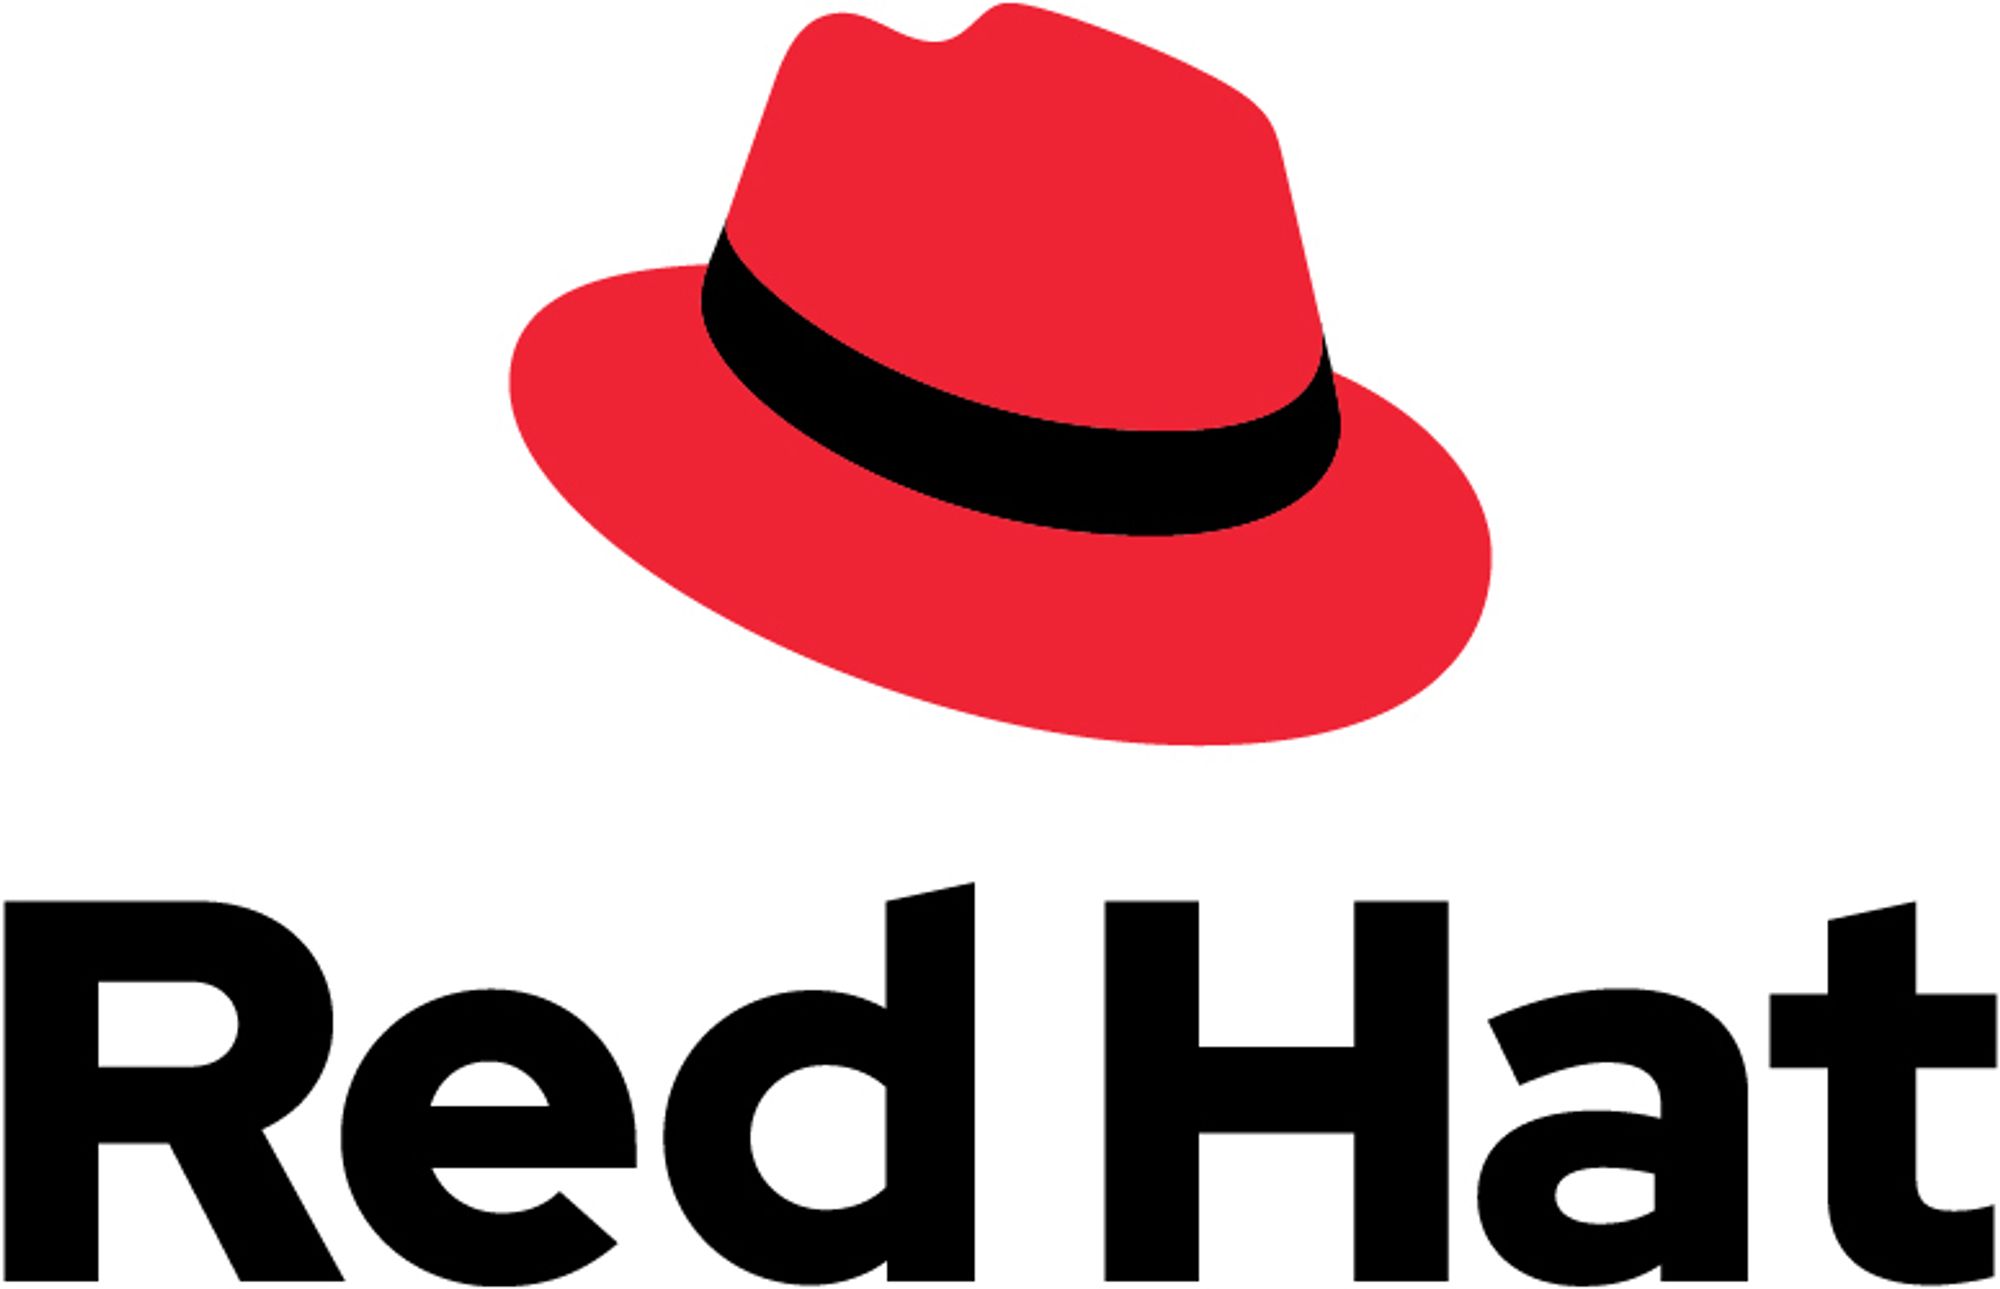 Red hat 7. Red hat логотип. Red hat Enterprise Linux logo. Шляпа Red hat. Шляпа лого.